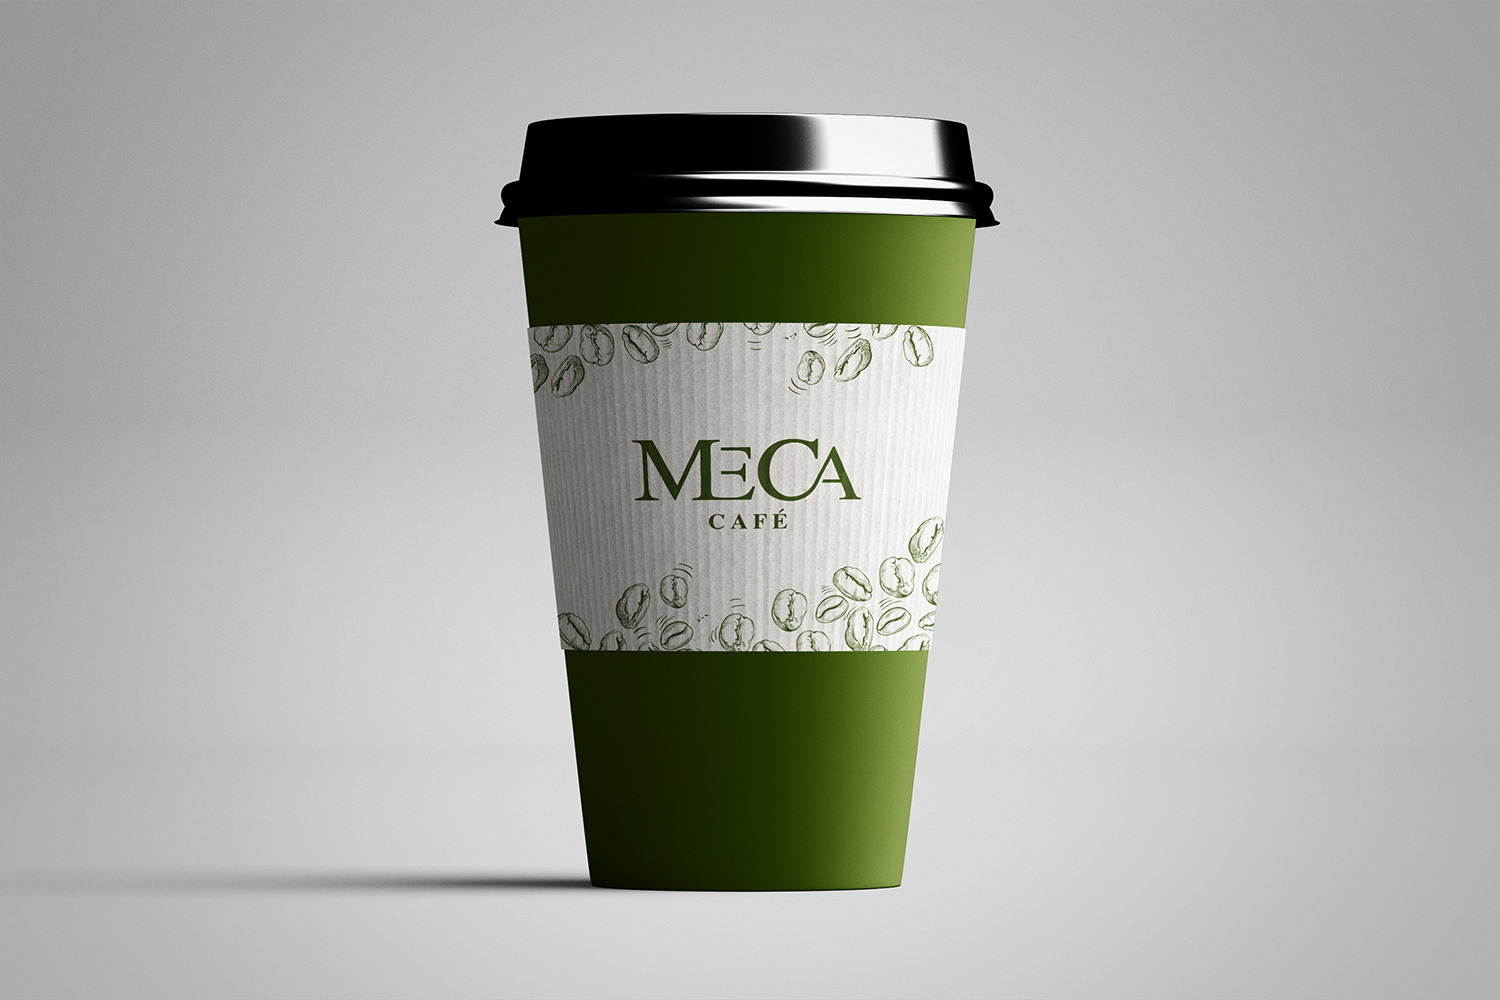 Thiết kế bao bì Meca Café